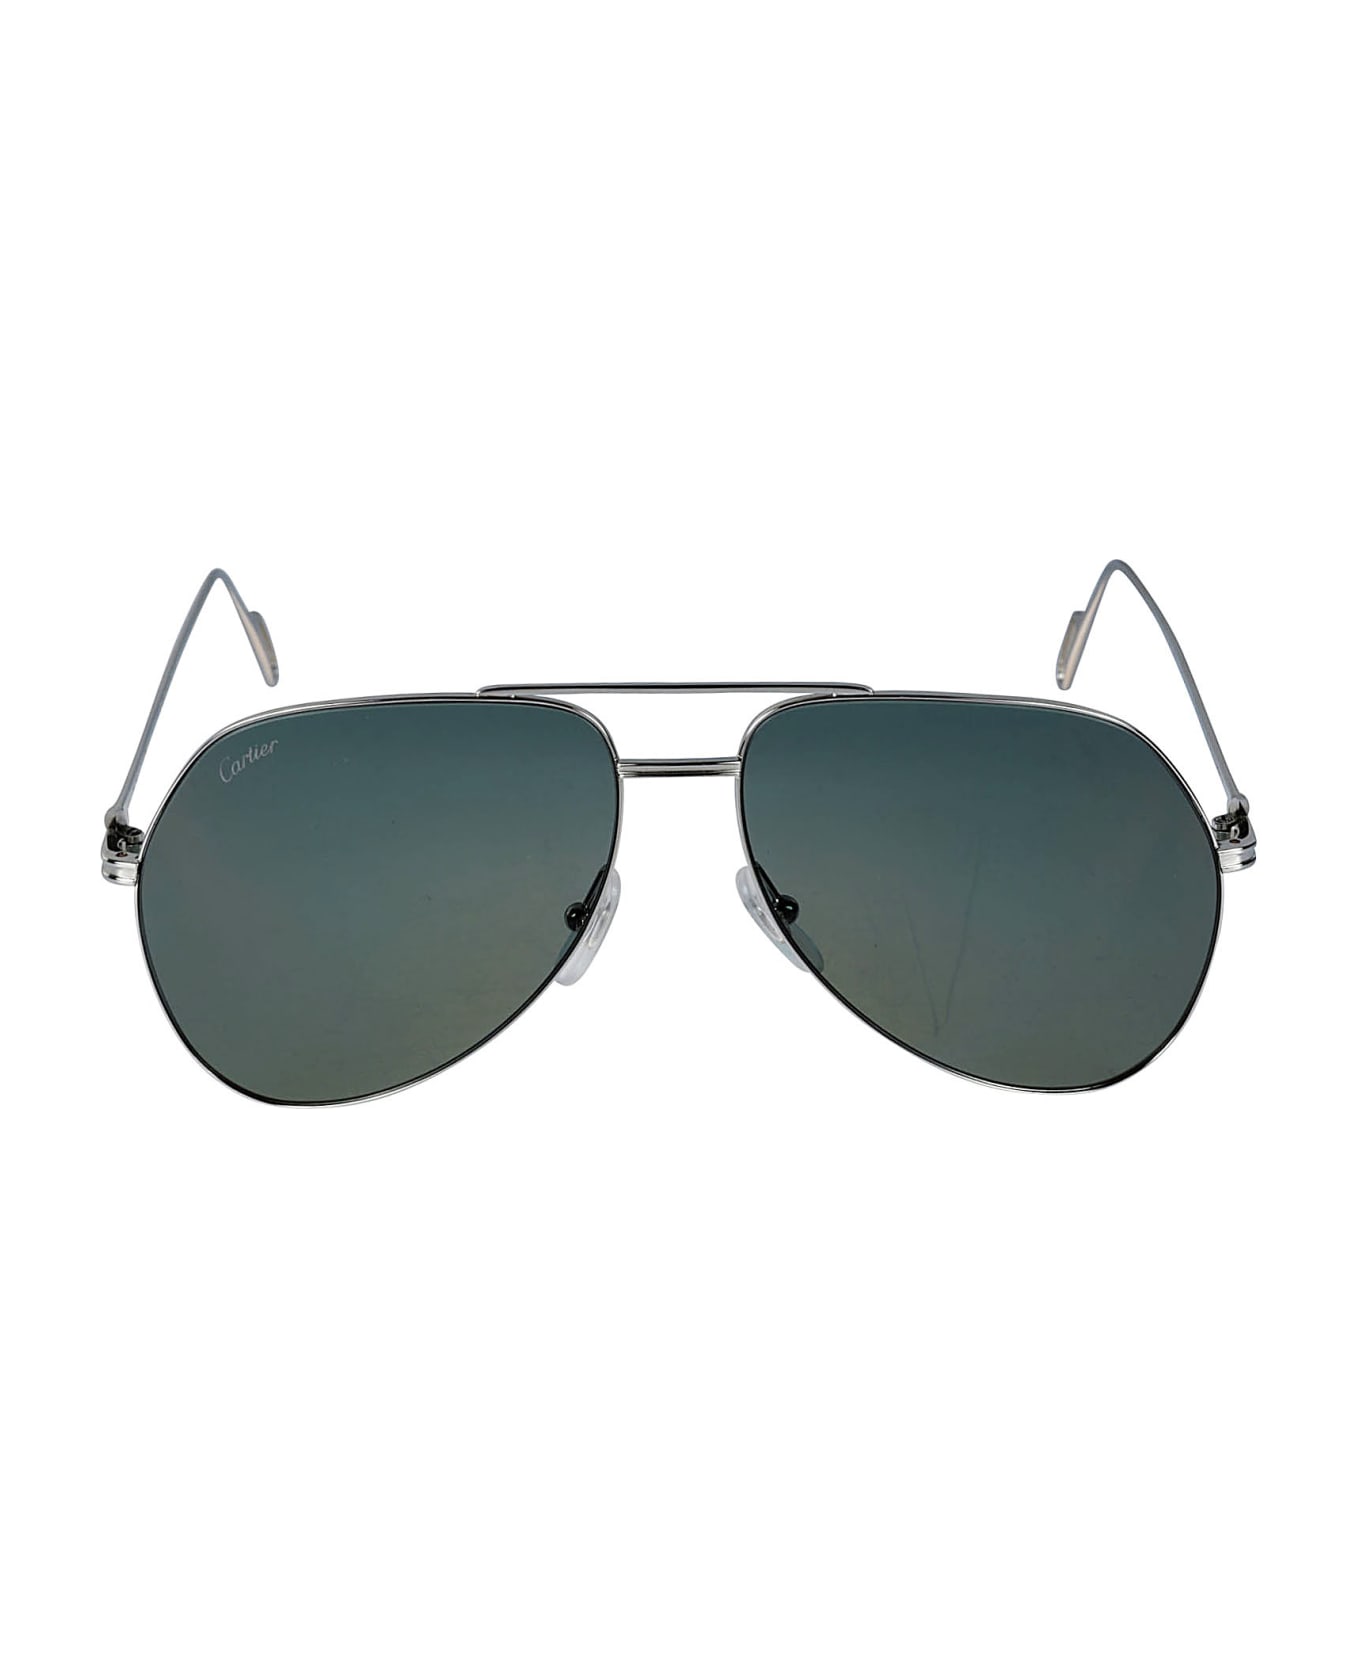 Cartier Eyewear Aviator Teardrop Sunglasses - Green/Grey